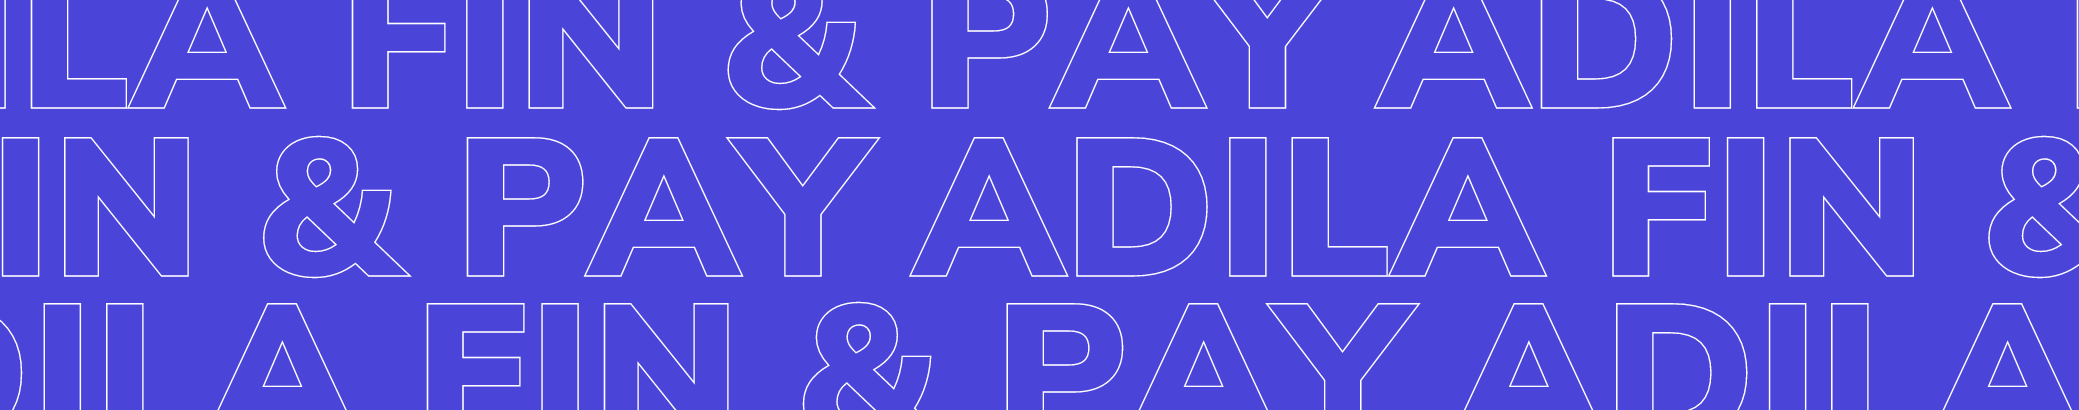 Adila Fin & Pay's profile banner